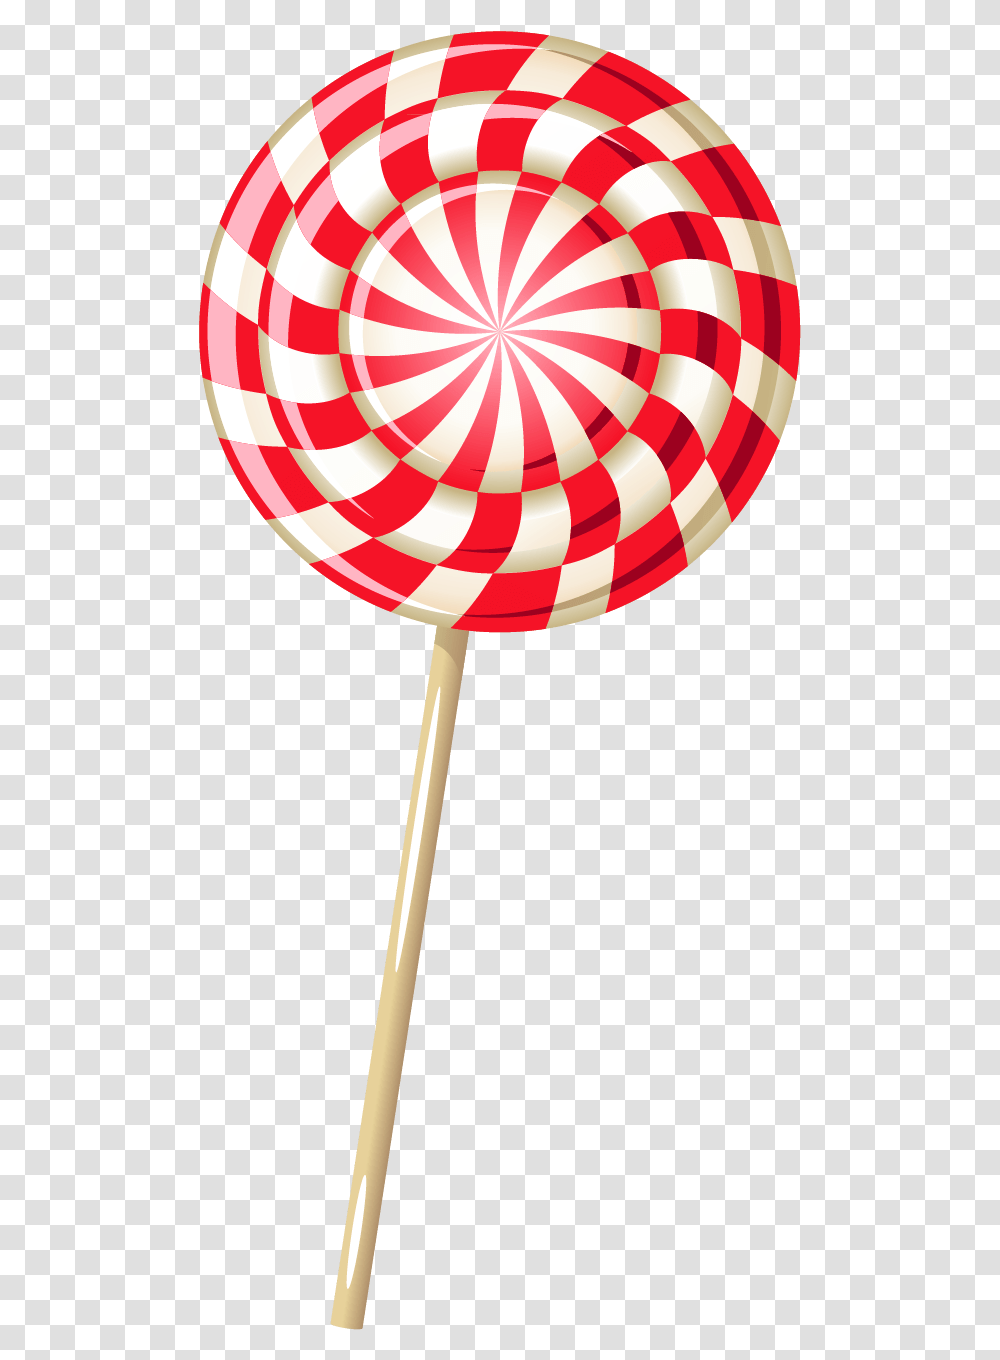 Lollipop Single Large Lollipop, Food, Balloon, Candy, Lamp Transparent Png